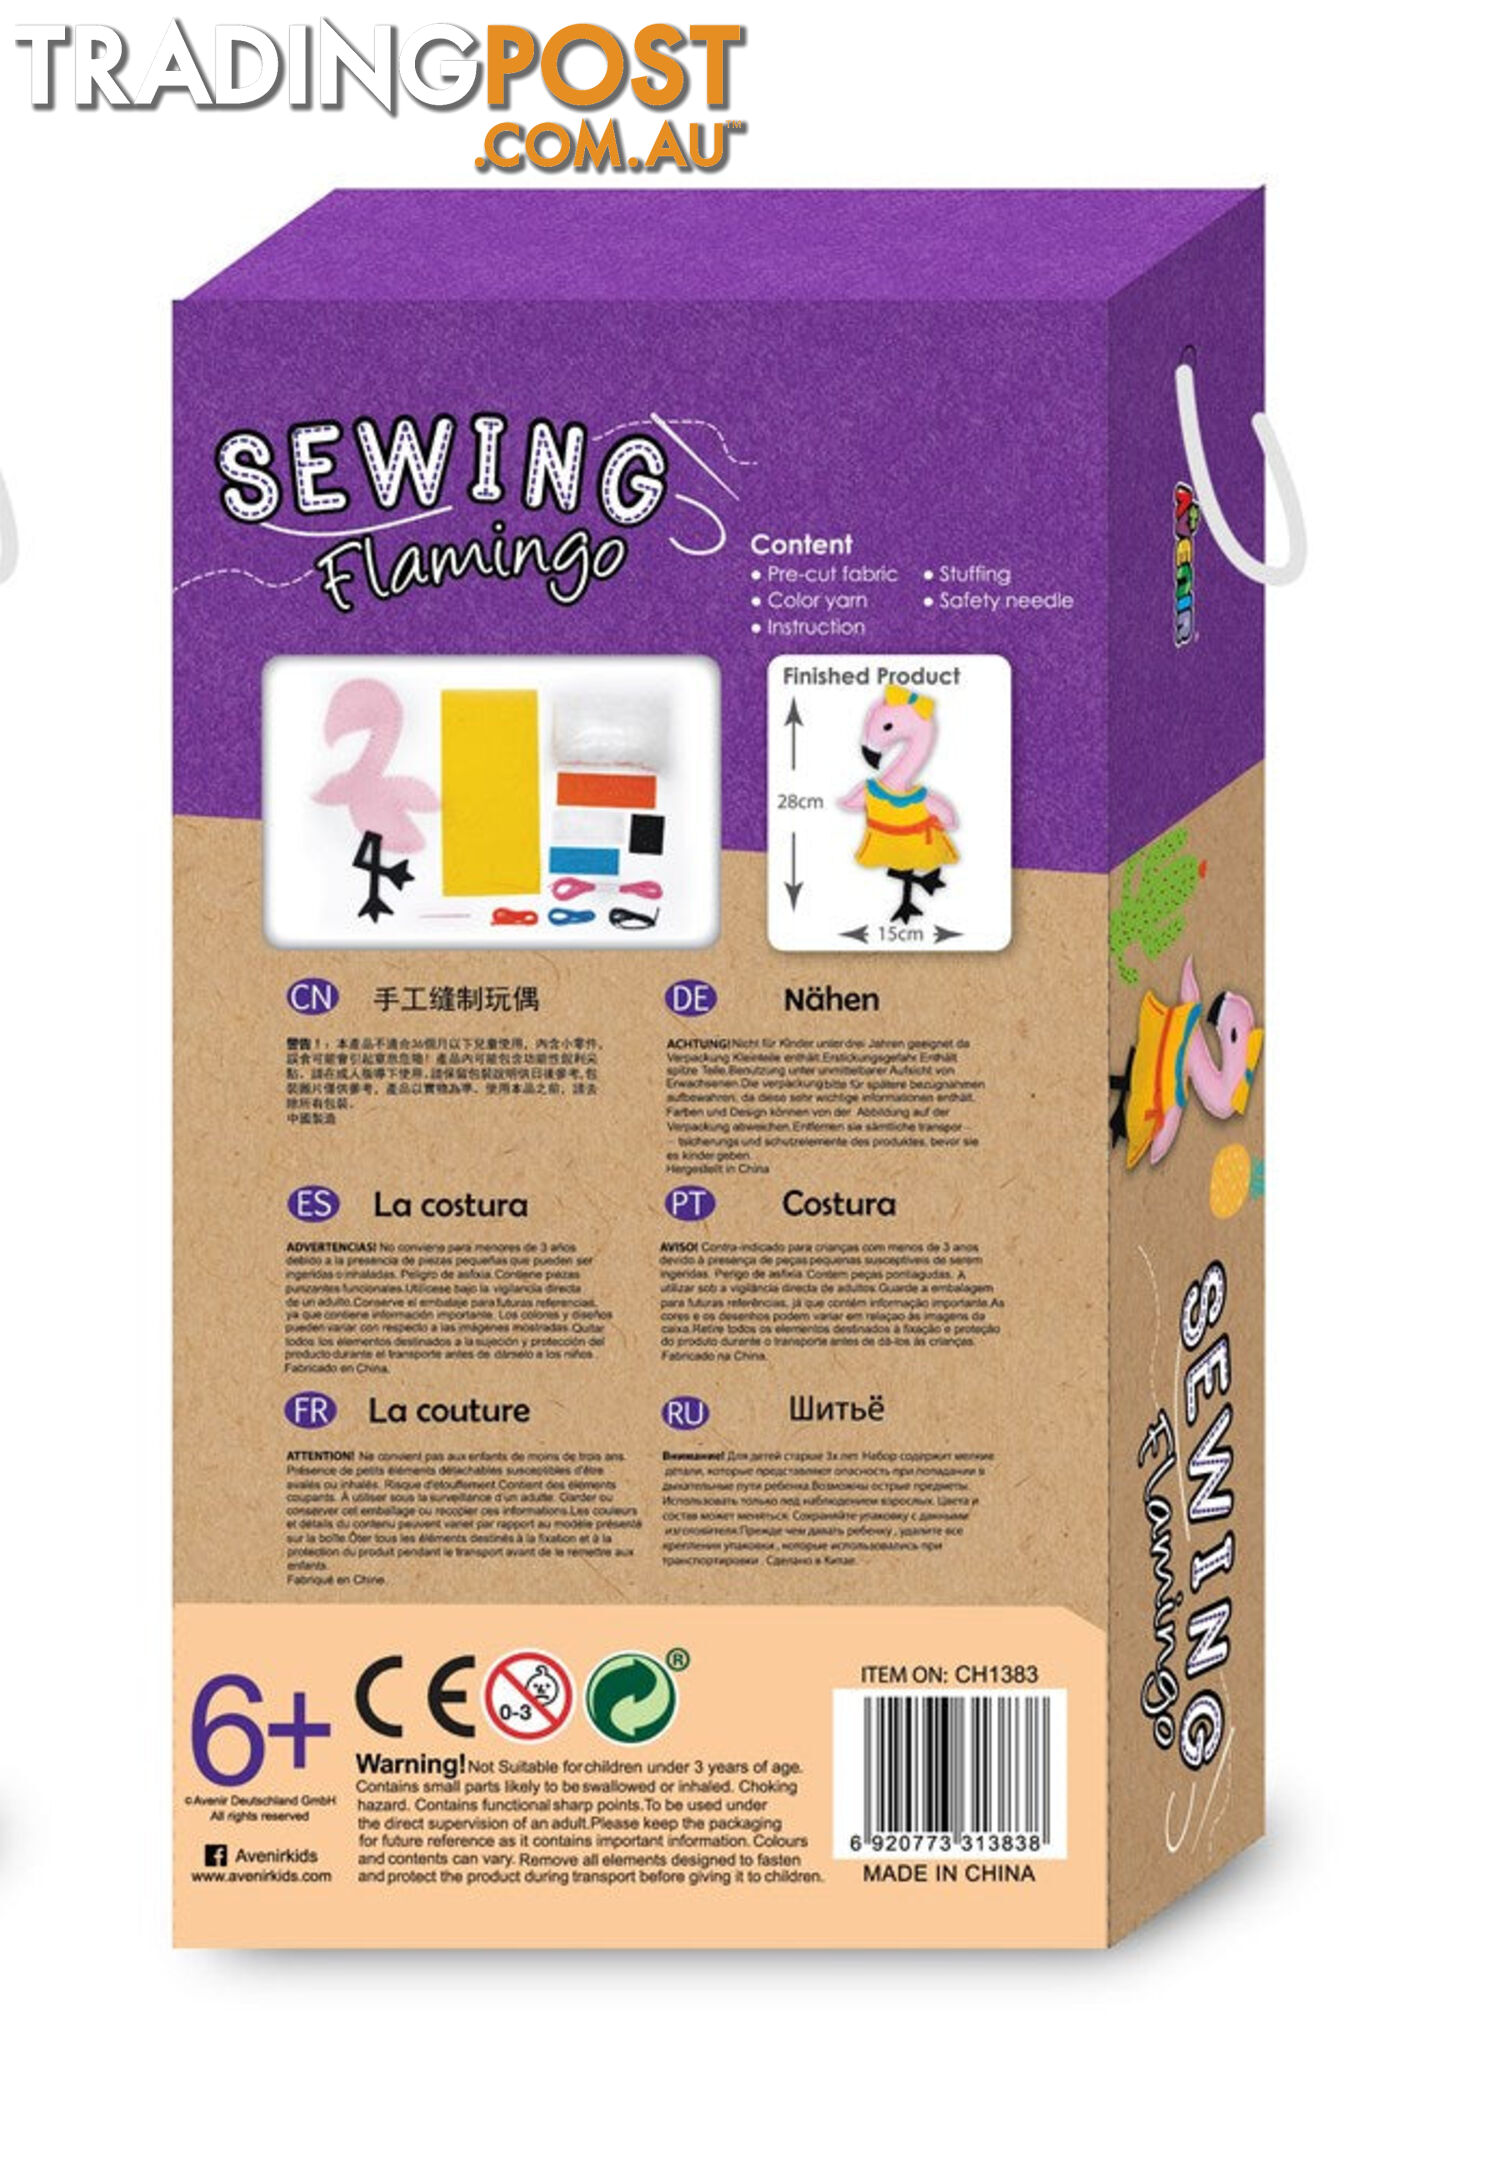 Avenir - Sewing - Flamingo Jpch1383 - 6920773313838